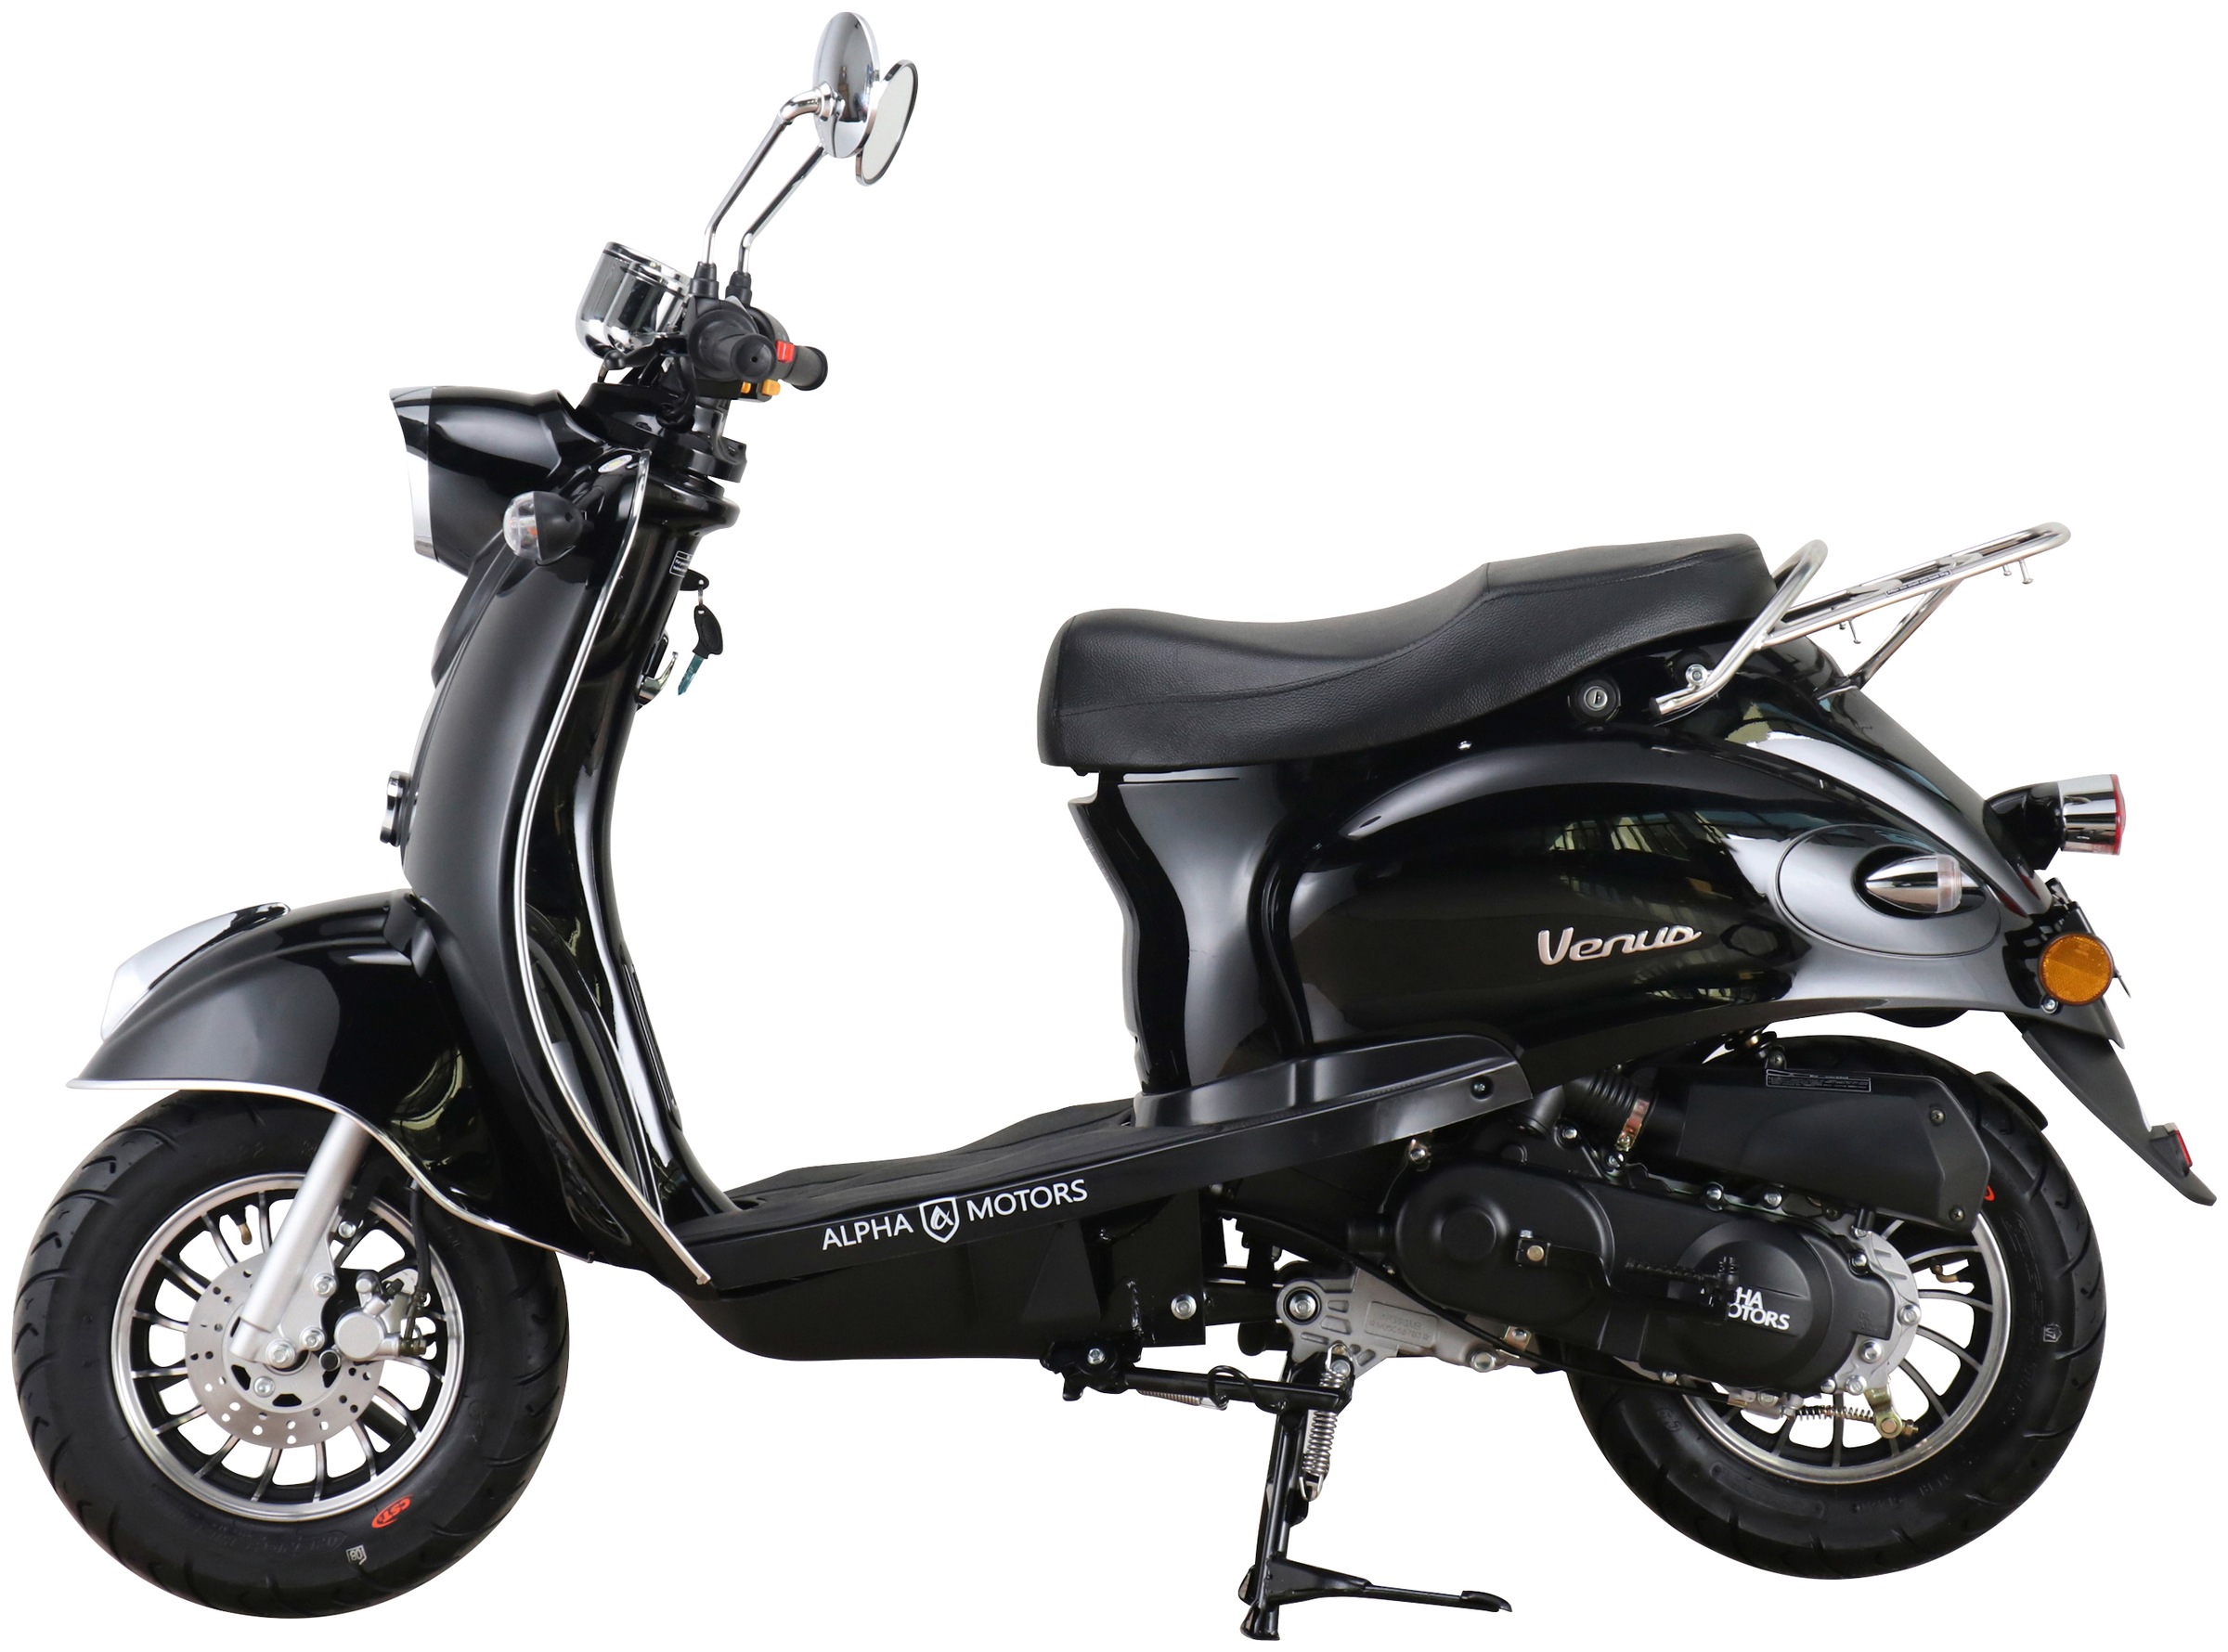 Motors 5, 50 45 cm³, »Venus«, Alpha jetzt %Sale im Motorroller km/h, PS Euro 2,99